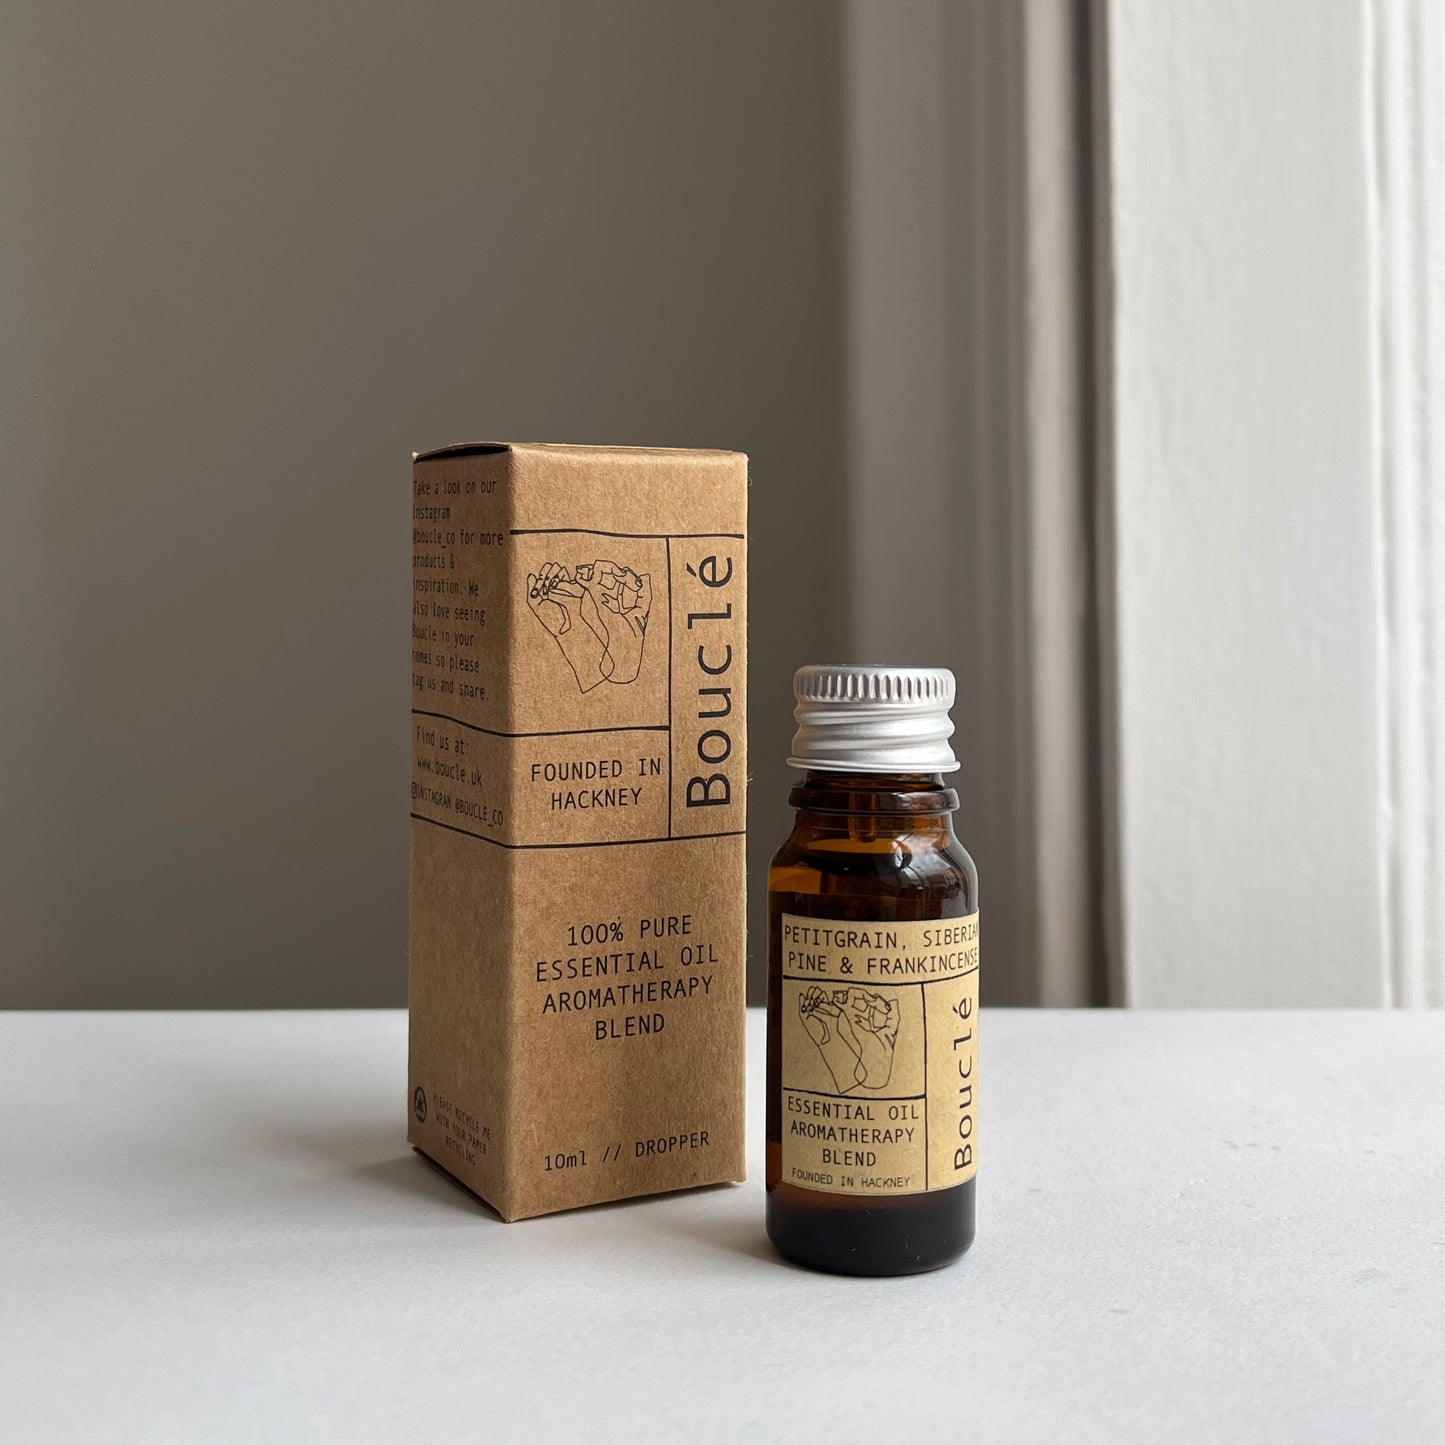 Petitgrain, Siberian Pine & Frankincense Aromatherapy Oil